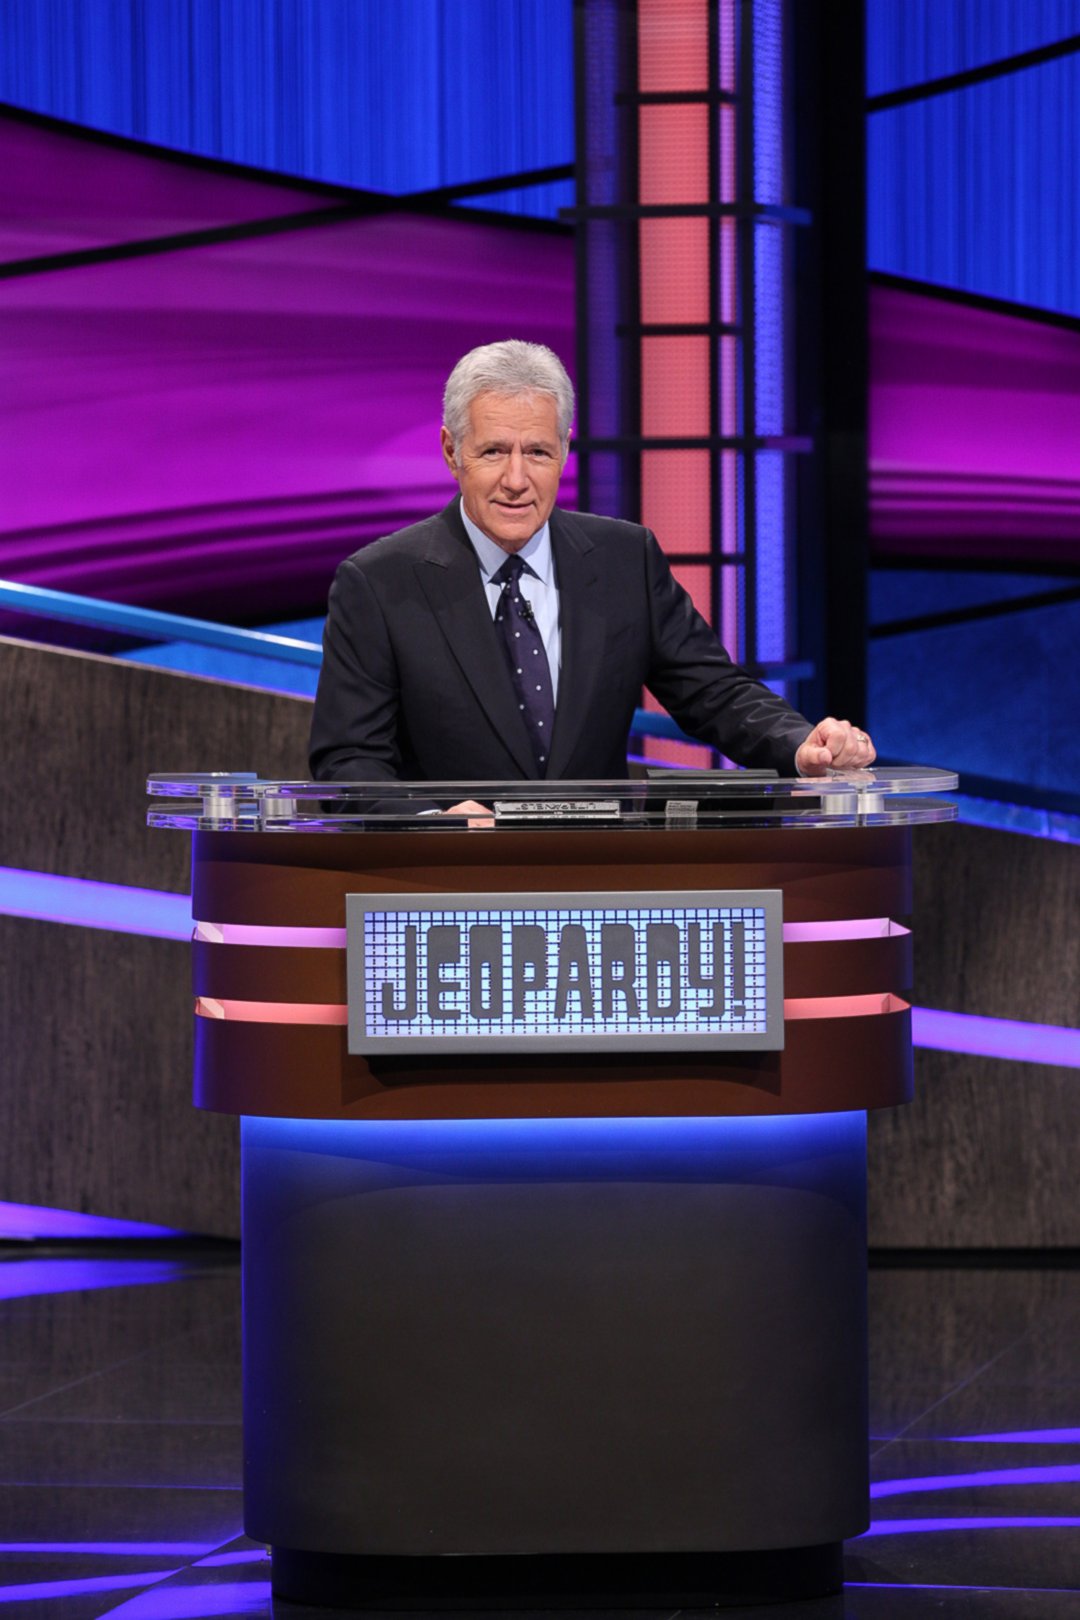 PHOTO: Alex Trebek is seen on the set of Jeopardy! in 2013.